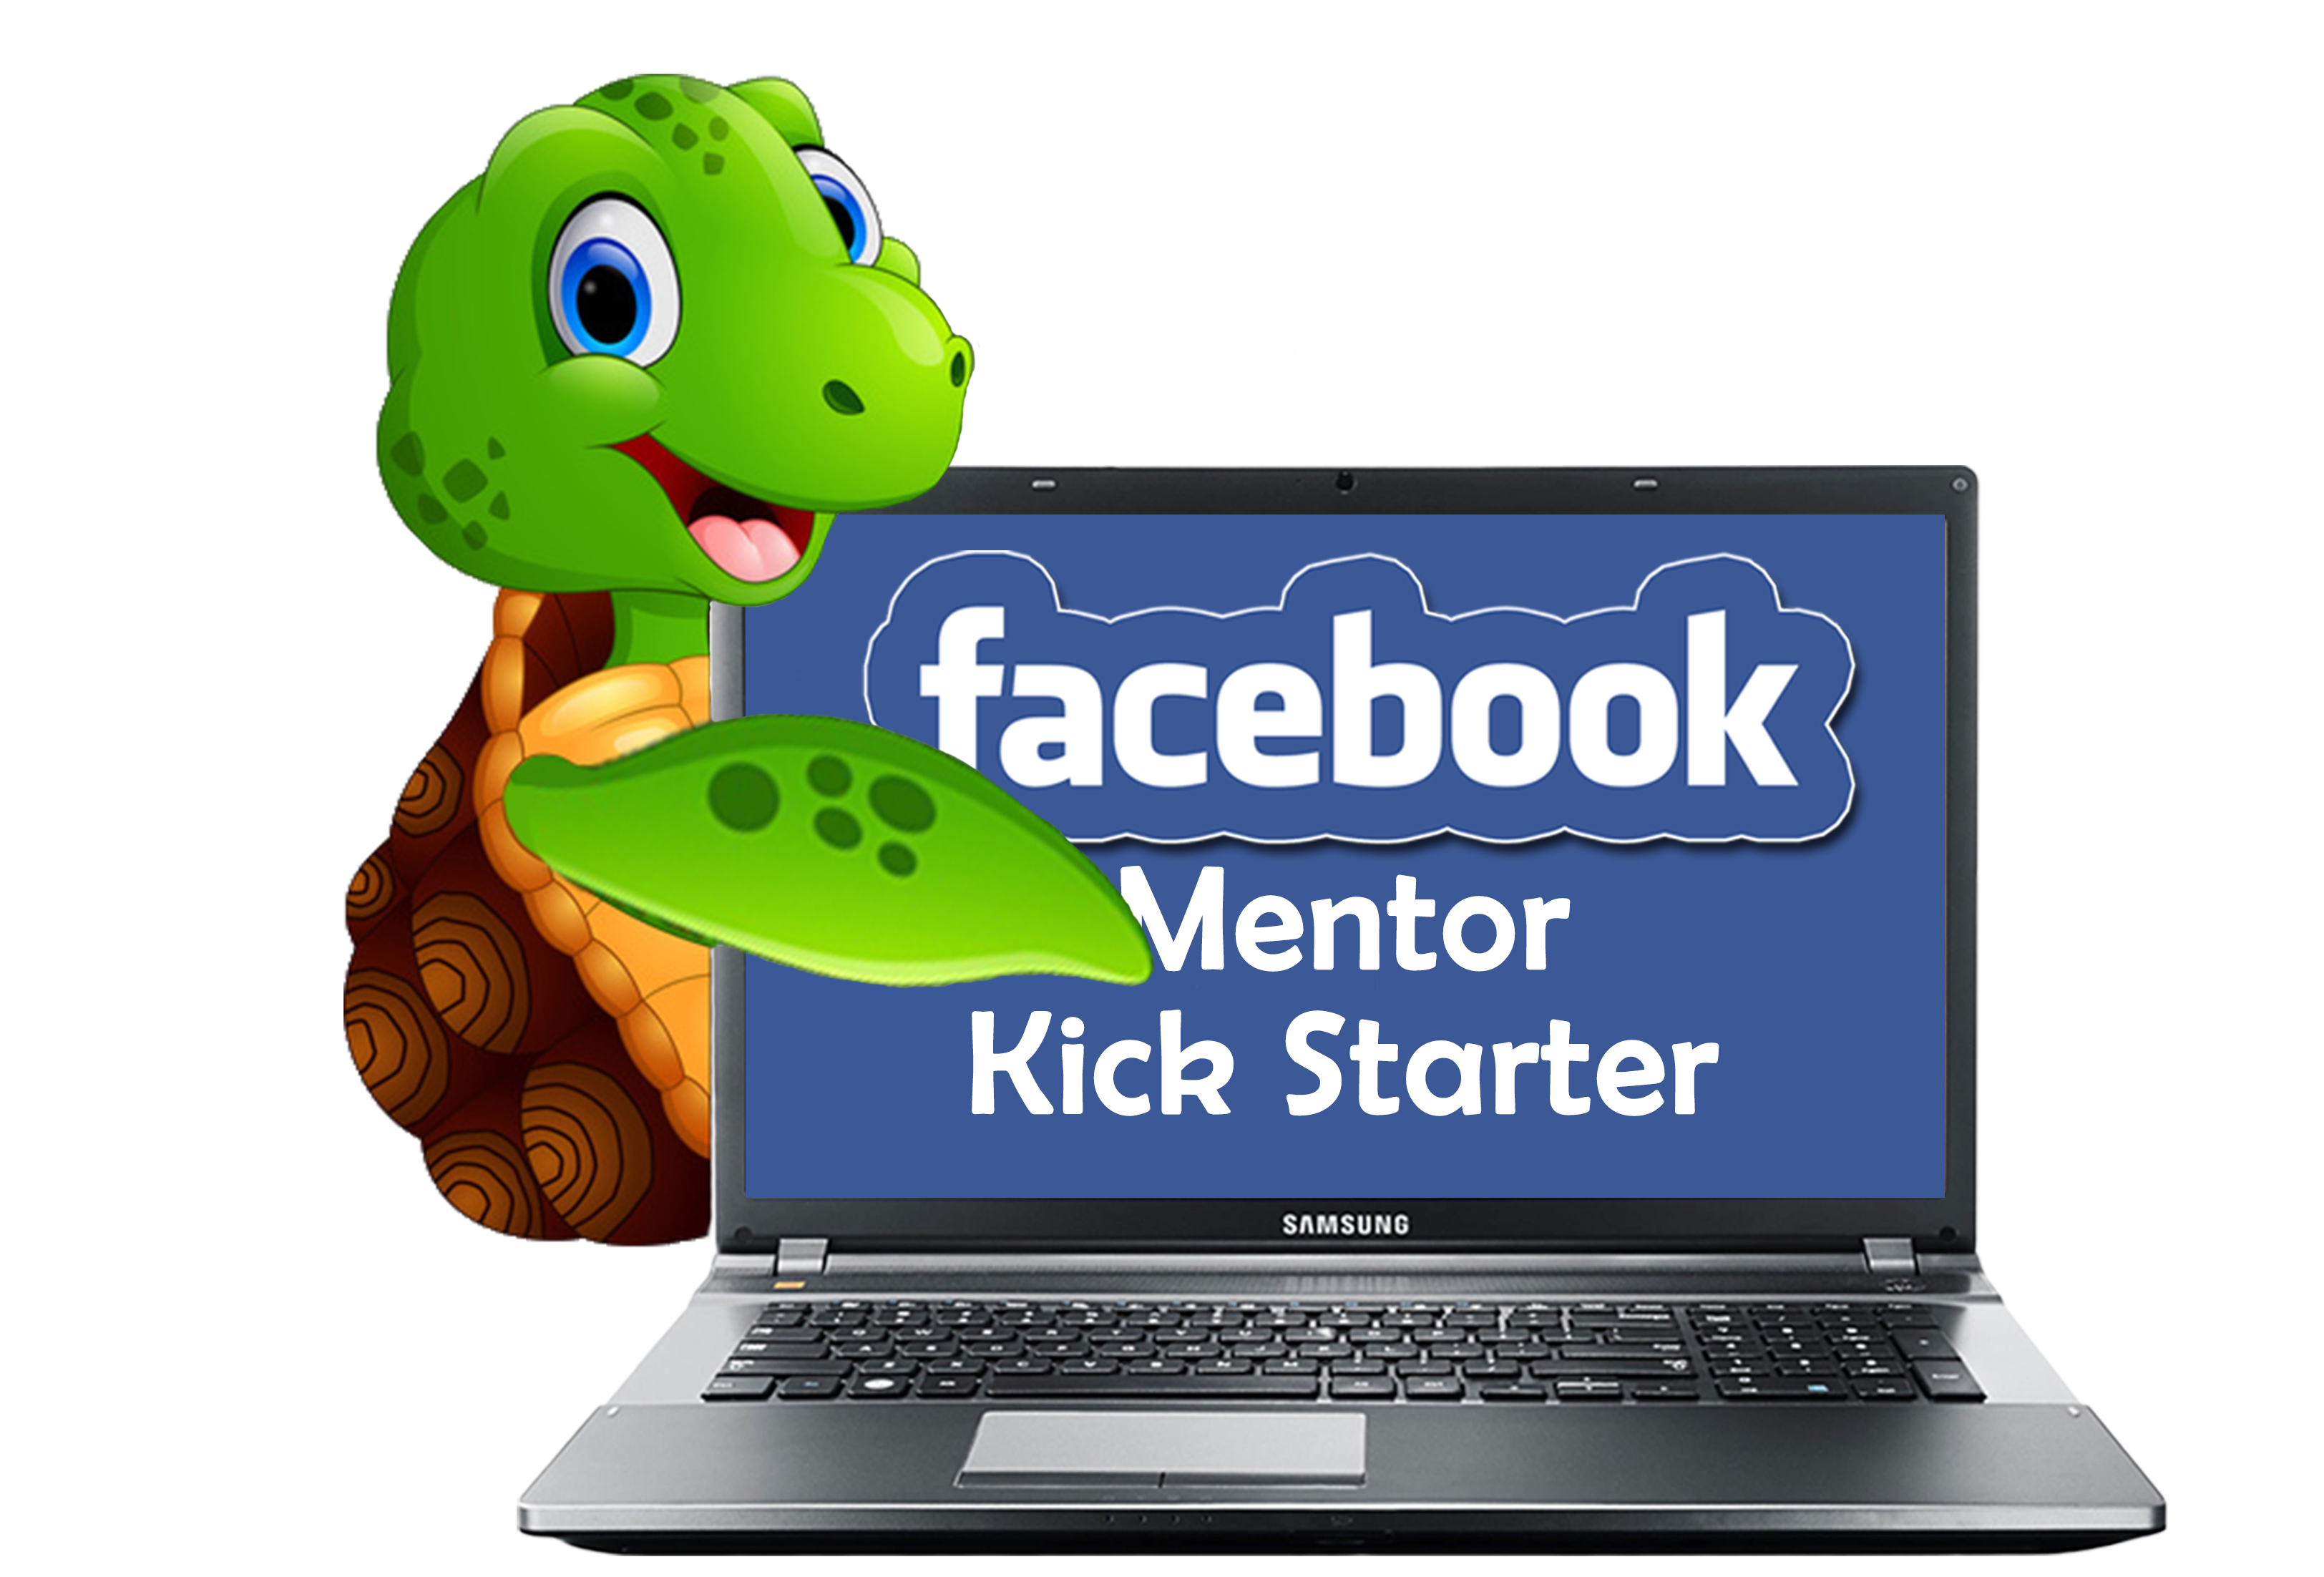 Facebook Mentor Kick Starter